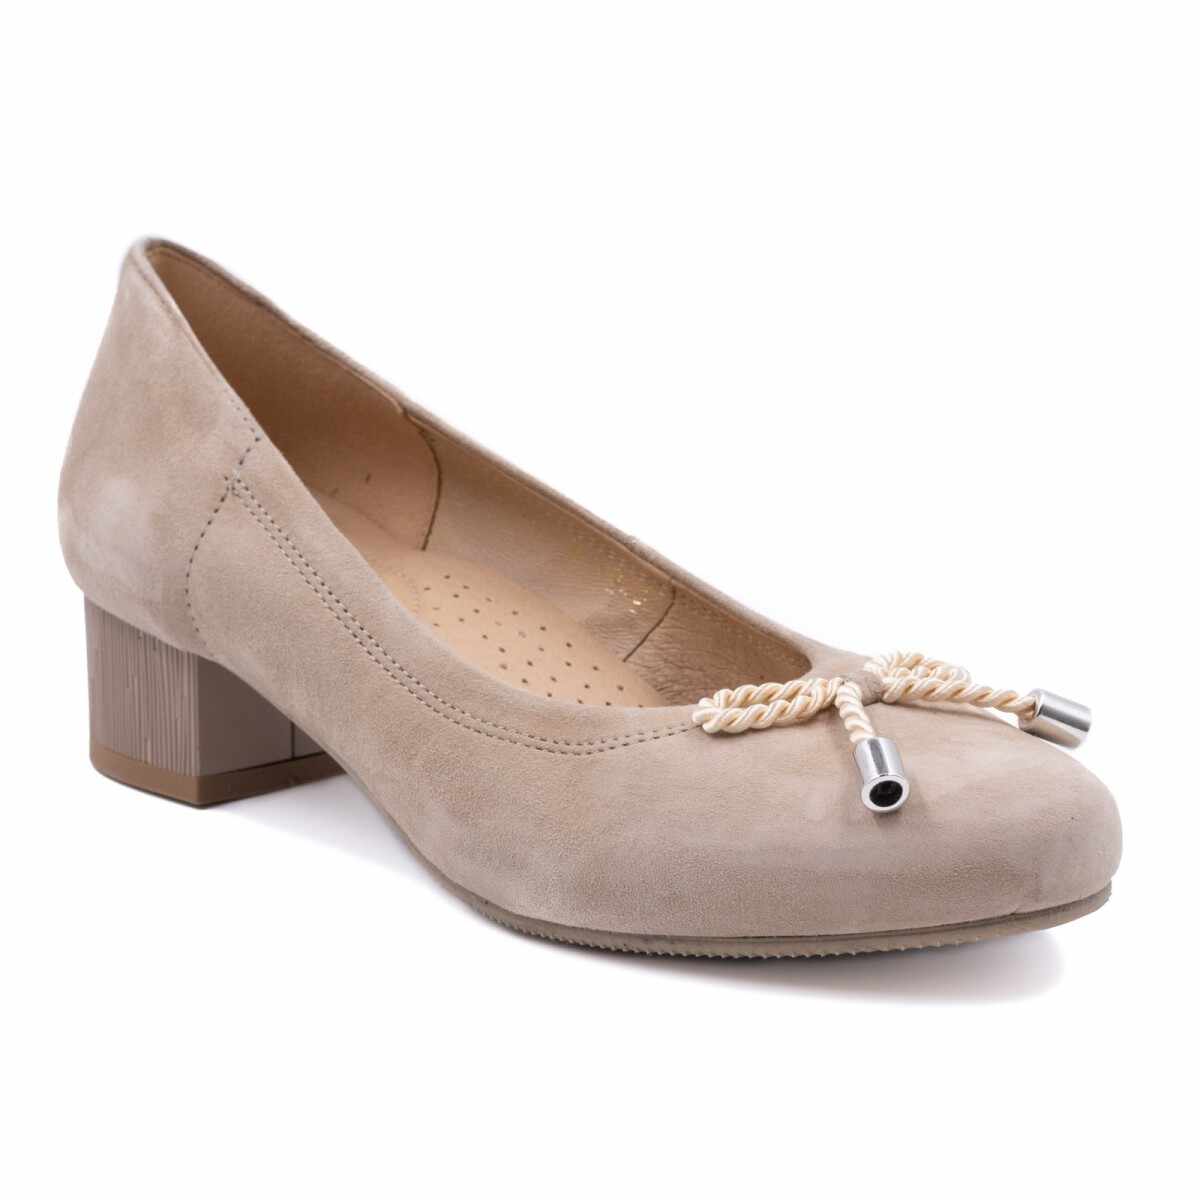 Pantofi eleganti dama, Beatrixx, din piele naturala velour, accesoriu elegant, culoare bej, cod AF-495